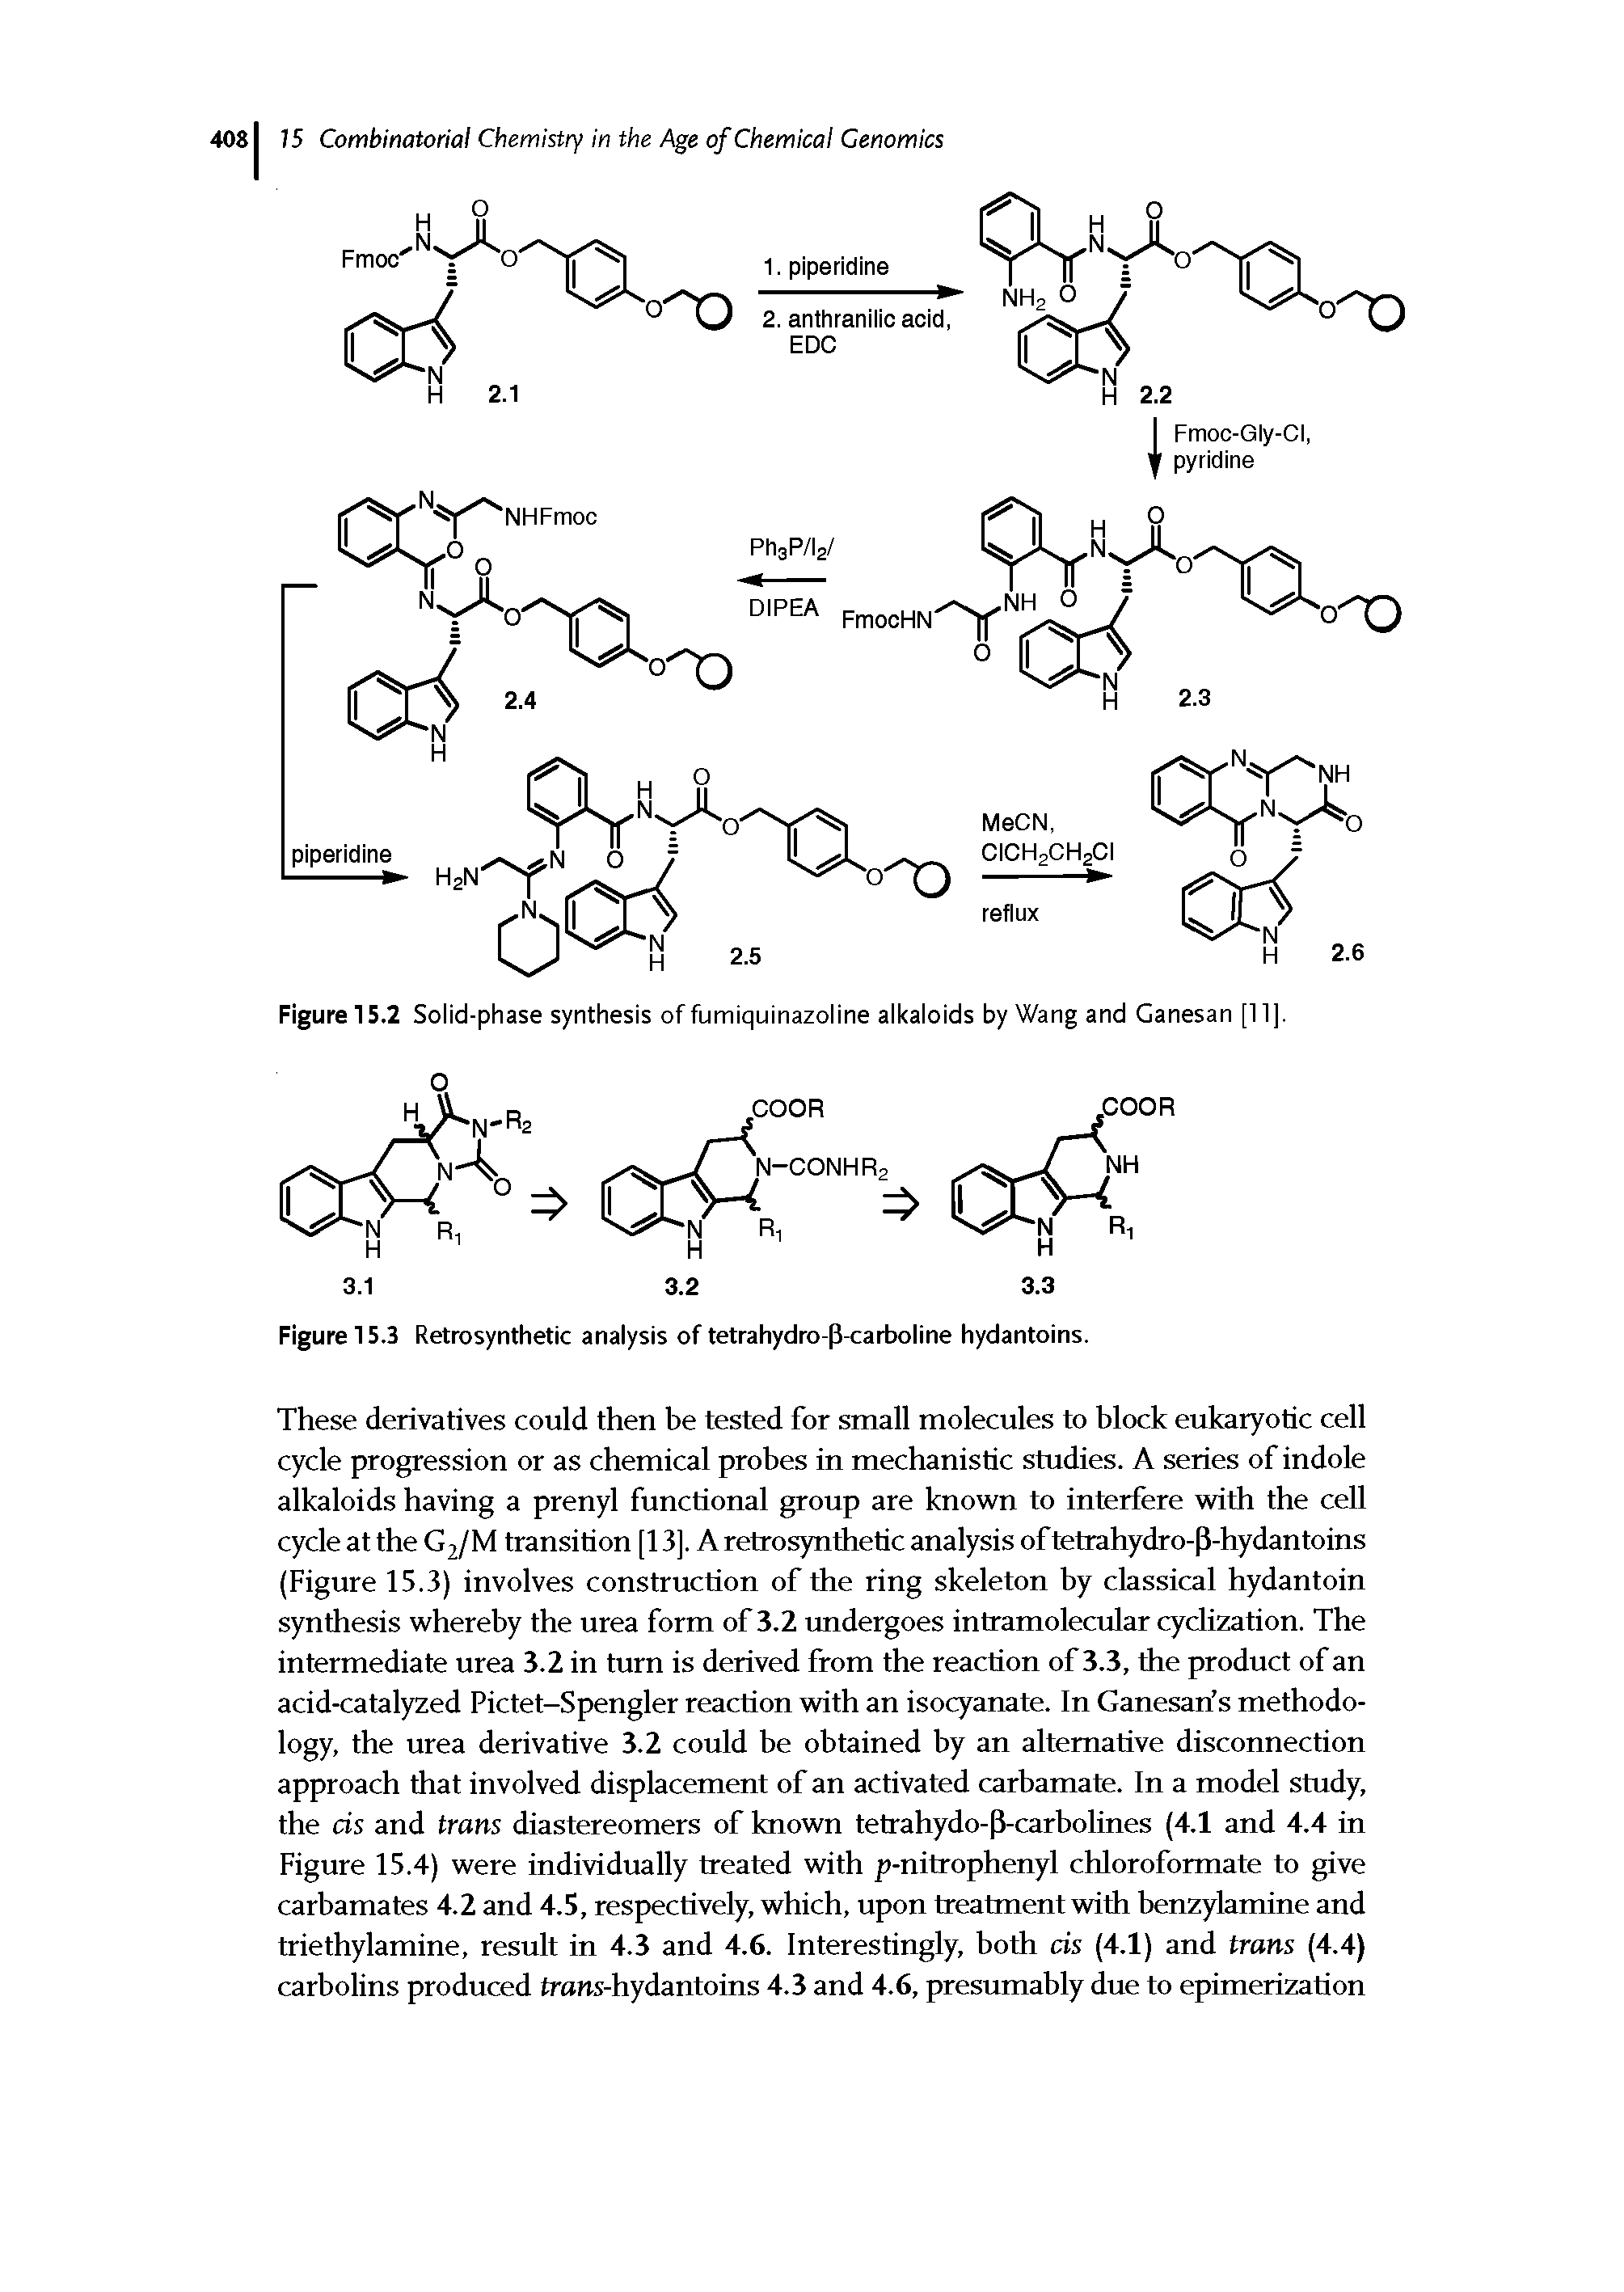 Figure 15.3 Retrosynthetic analysis of tetrahydro-P-carboline hydantoins.